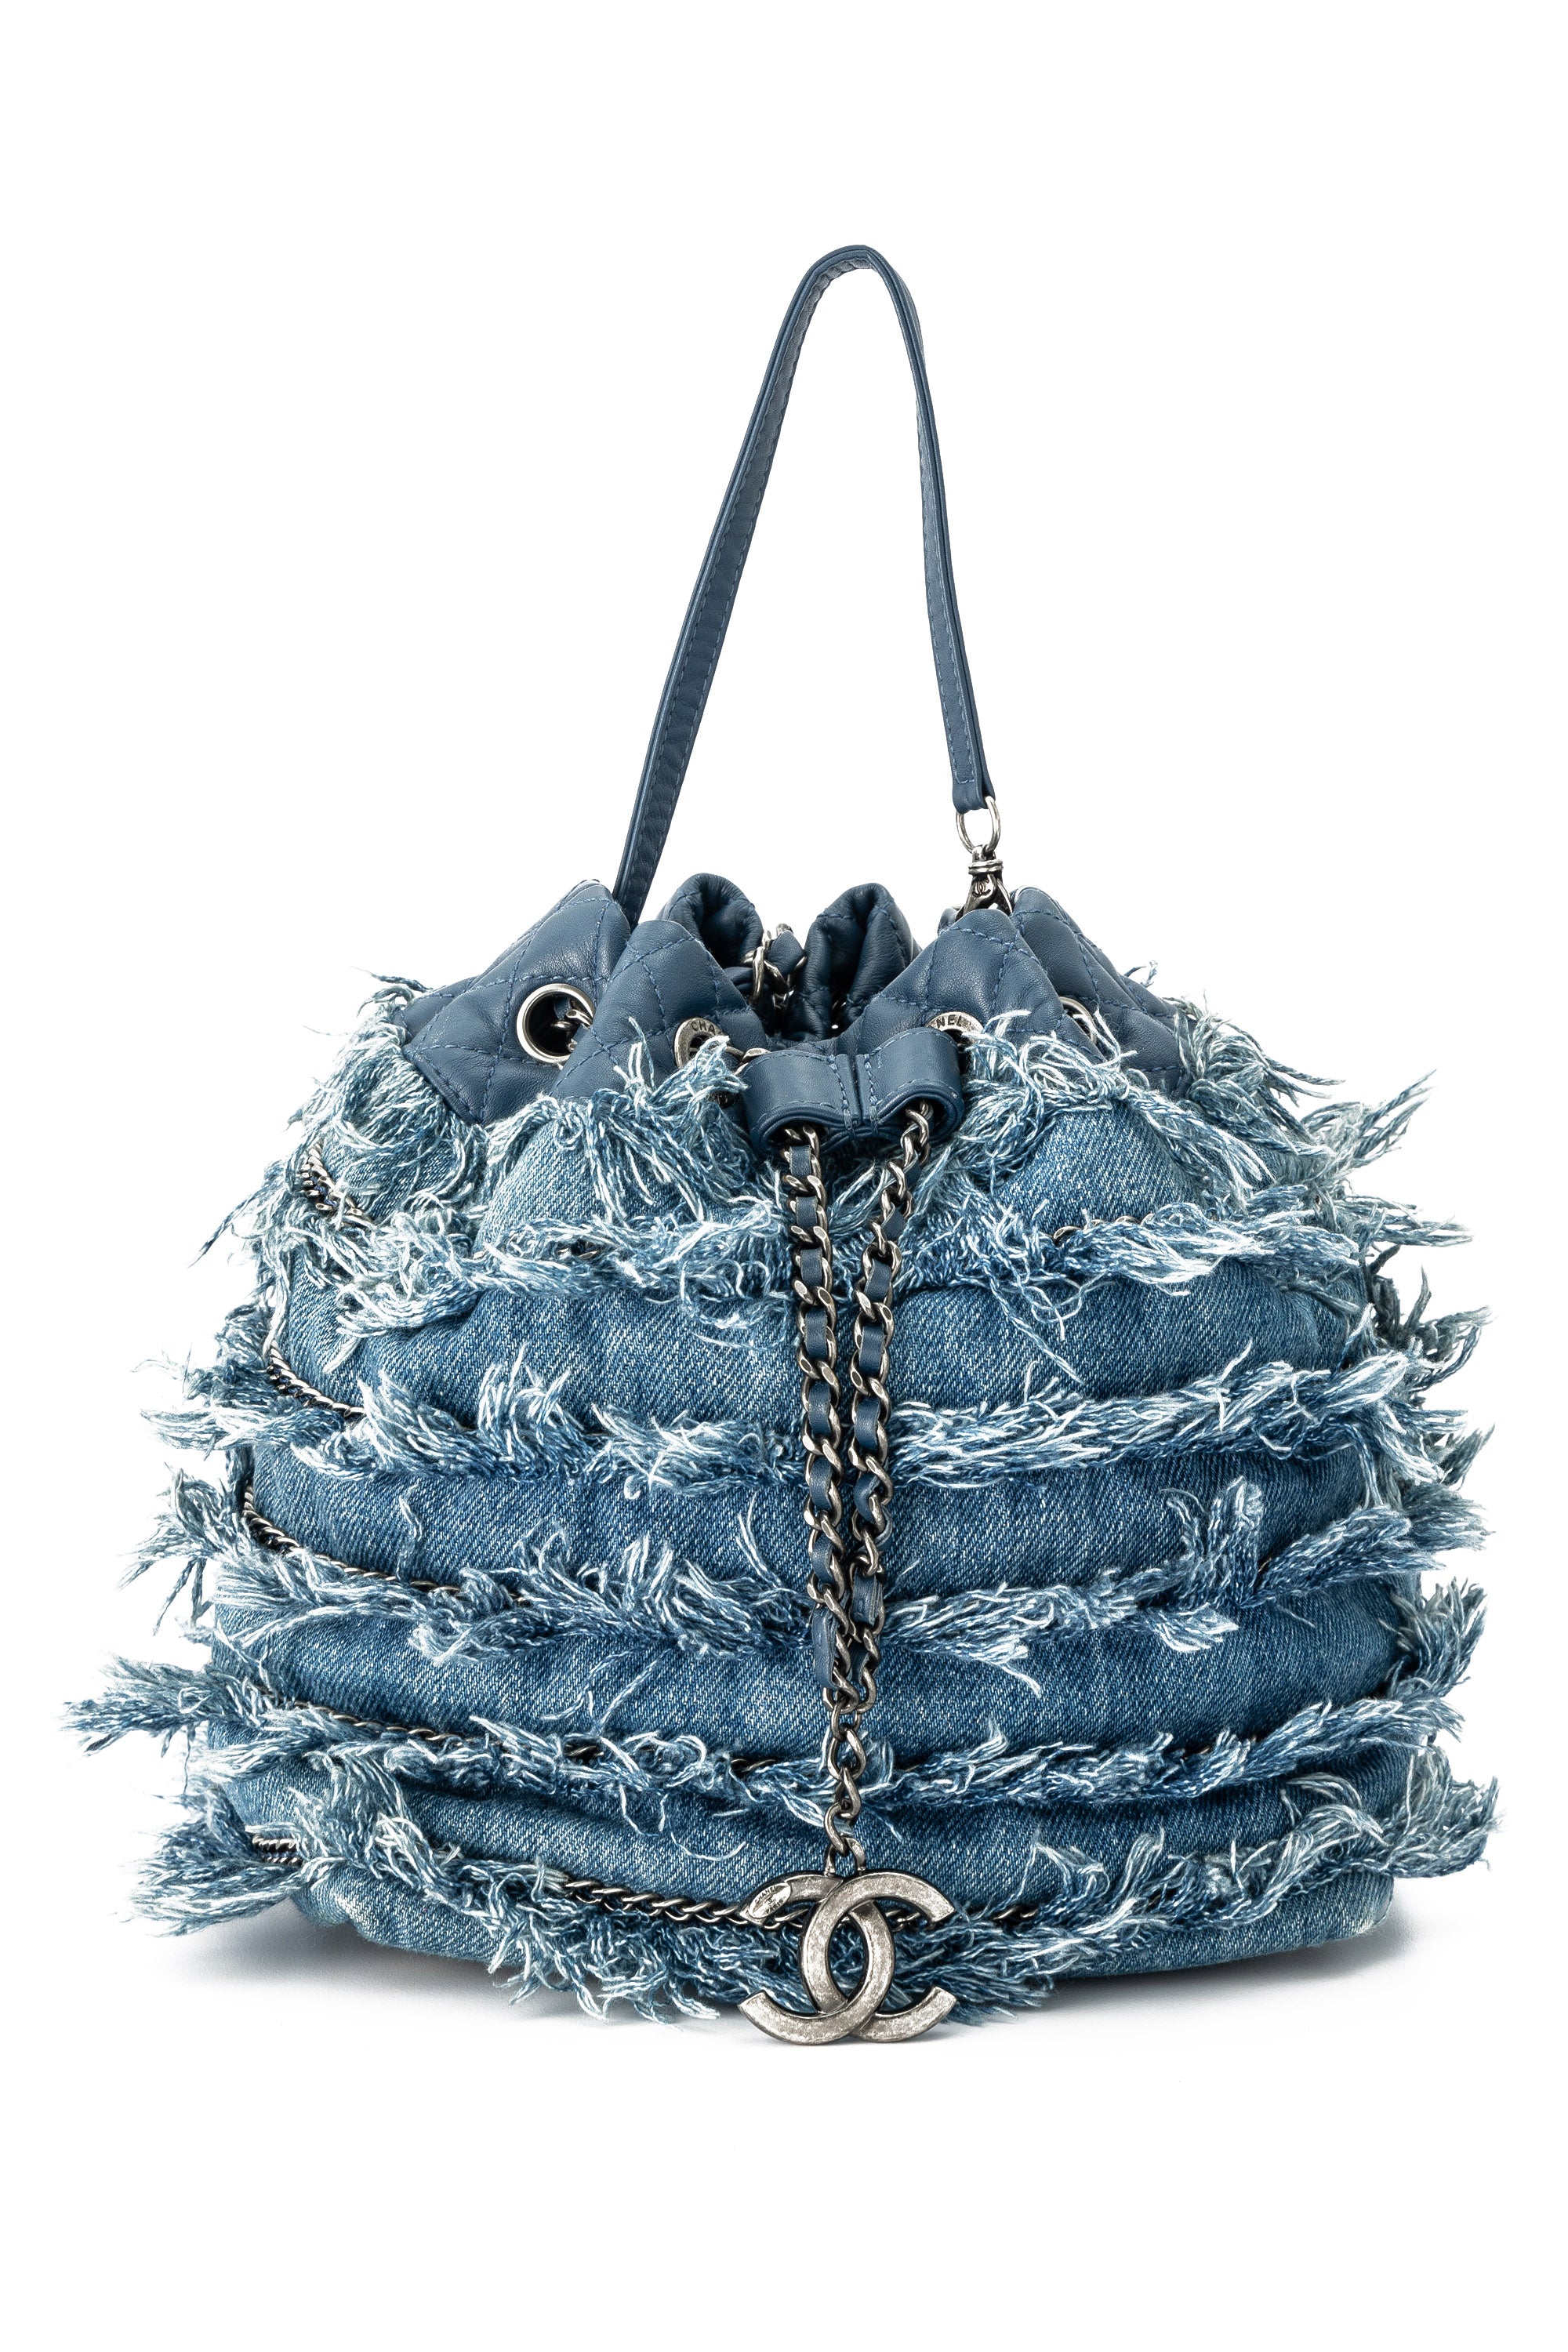 Chanel Drawstring Bucket Bag Cruise 2015 Tweed Fringe and Lambskin